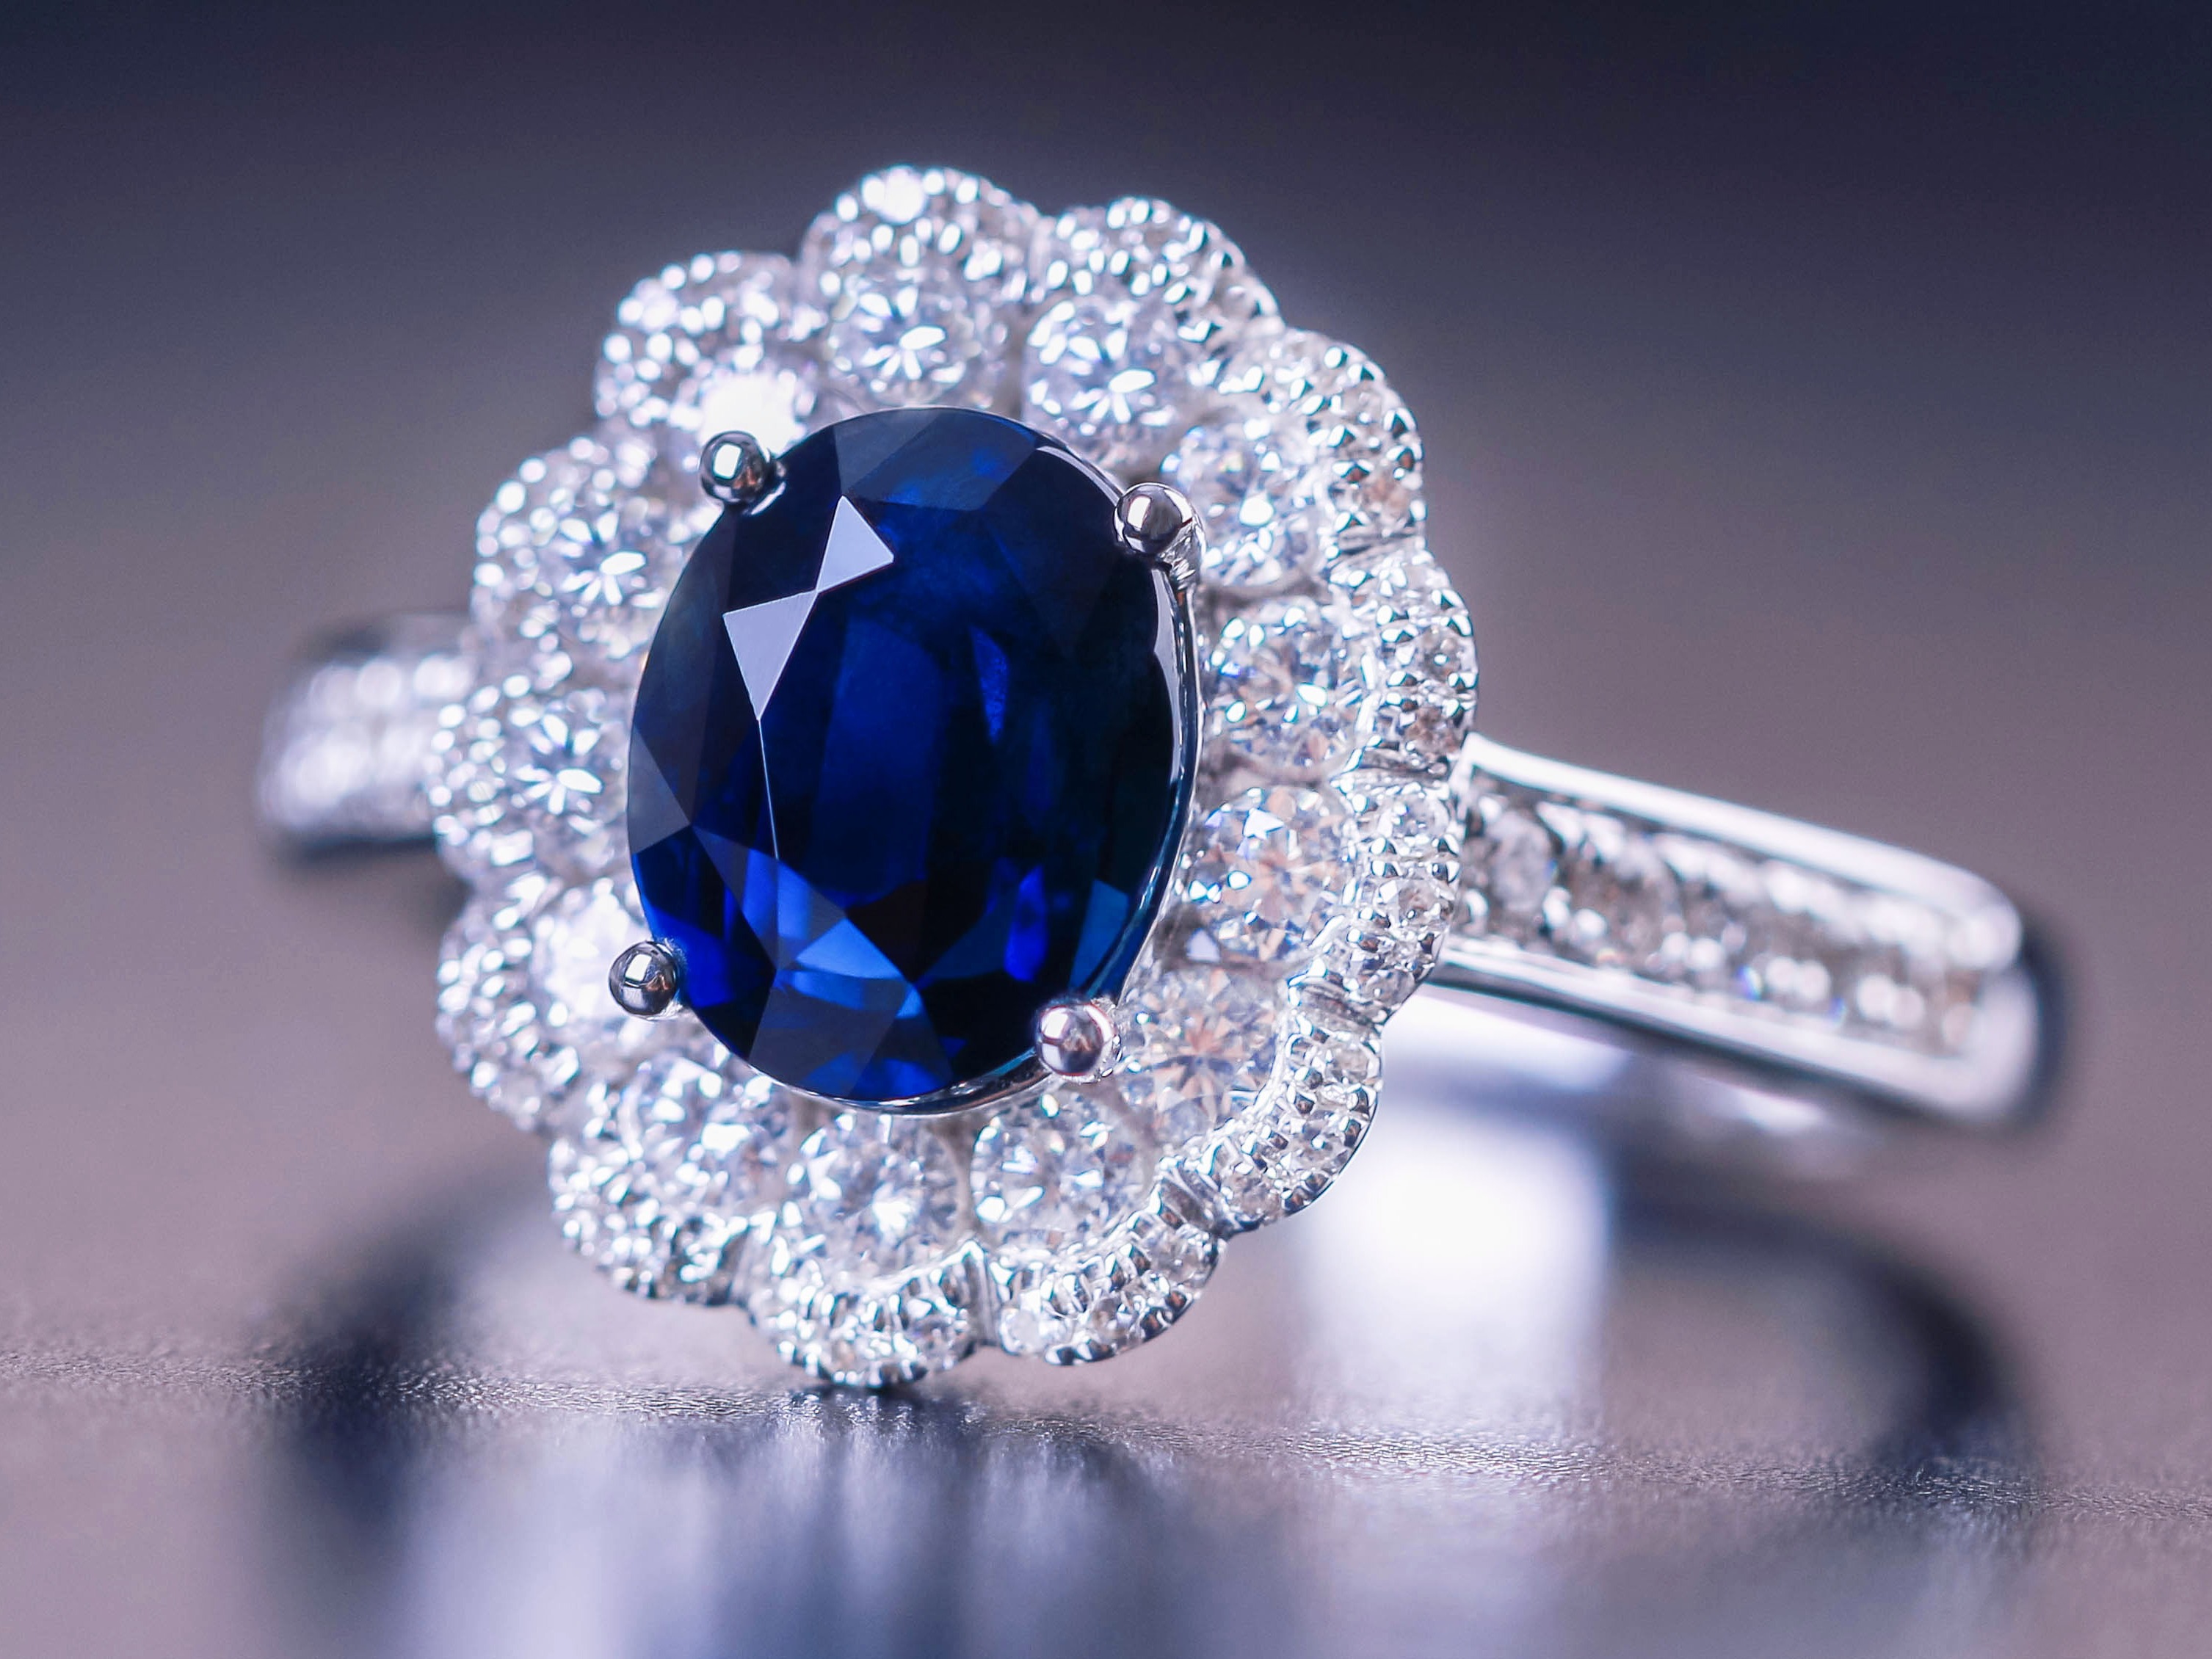 Cartier 卡地亚 Phaan 红宝石钻石戒指 | iDaily Jewelry · 每日珠宝杂志